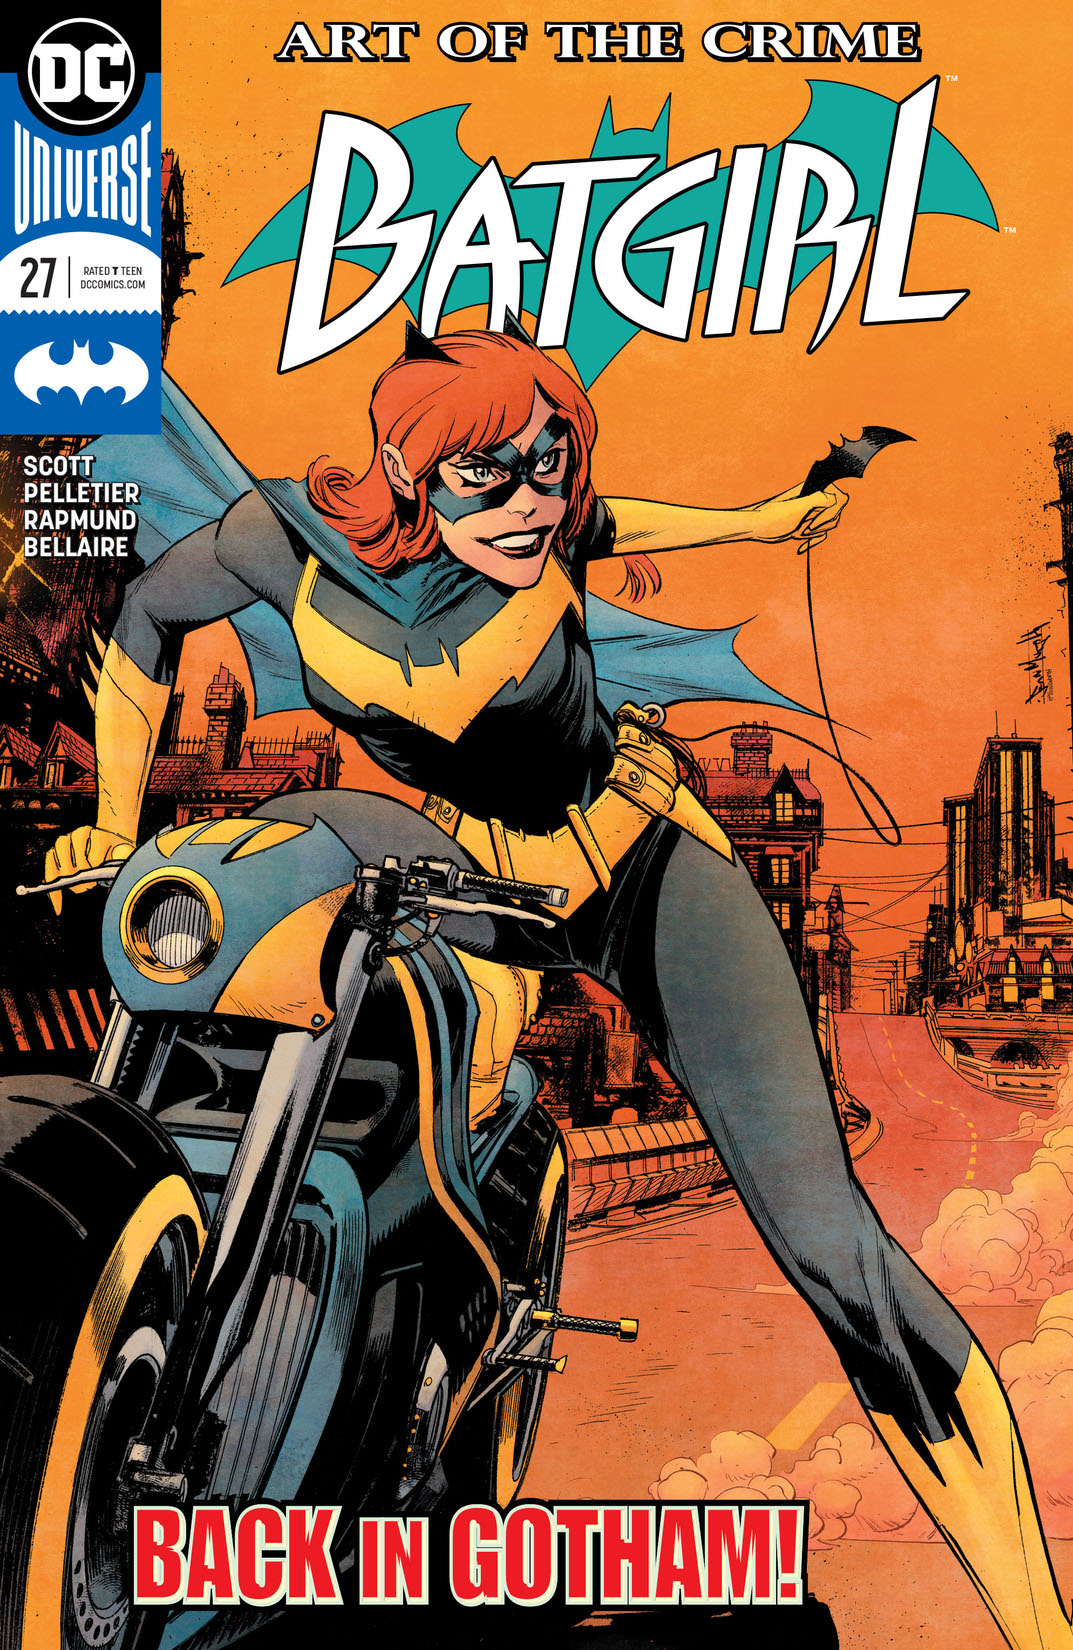 Batgirl (2016-) #27 preview images